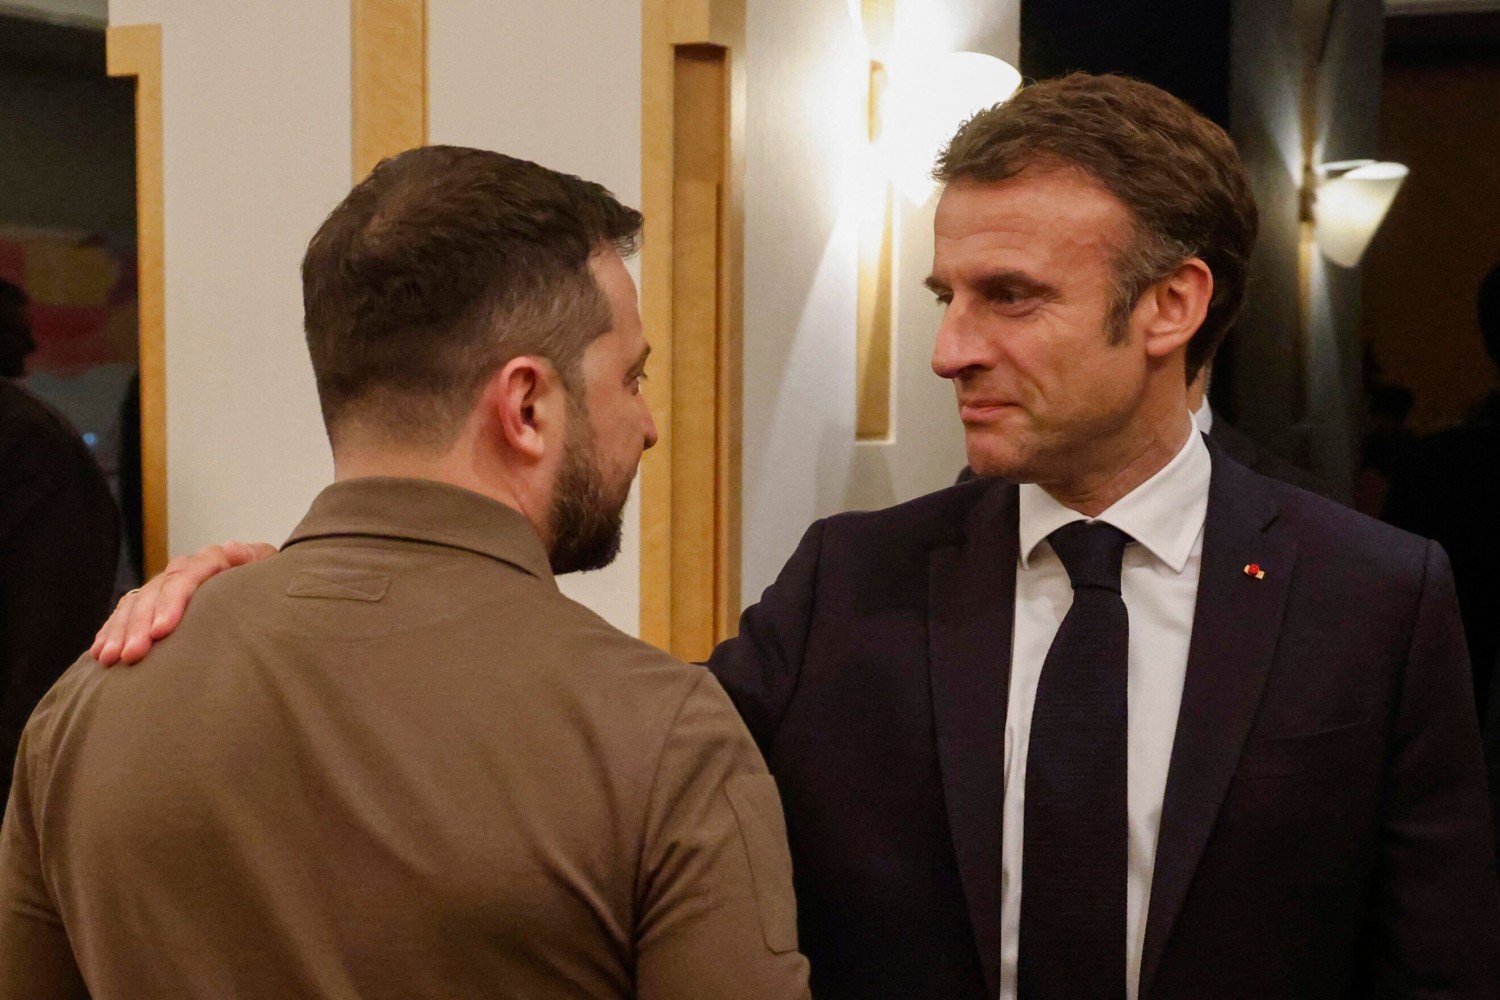 kraine's President Volodymyr Zelensky and France's President Emmanuel Macron | Ludovic Marin/AFP via Getty Images